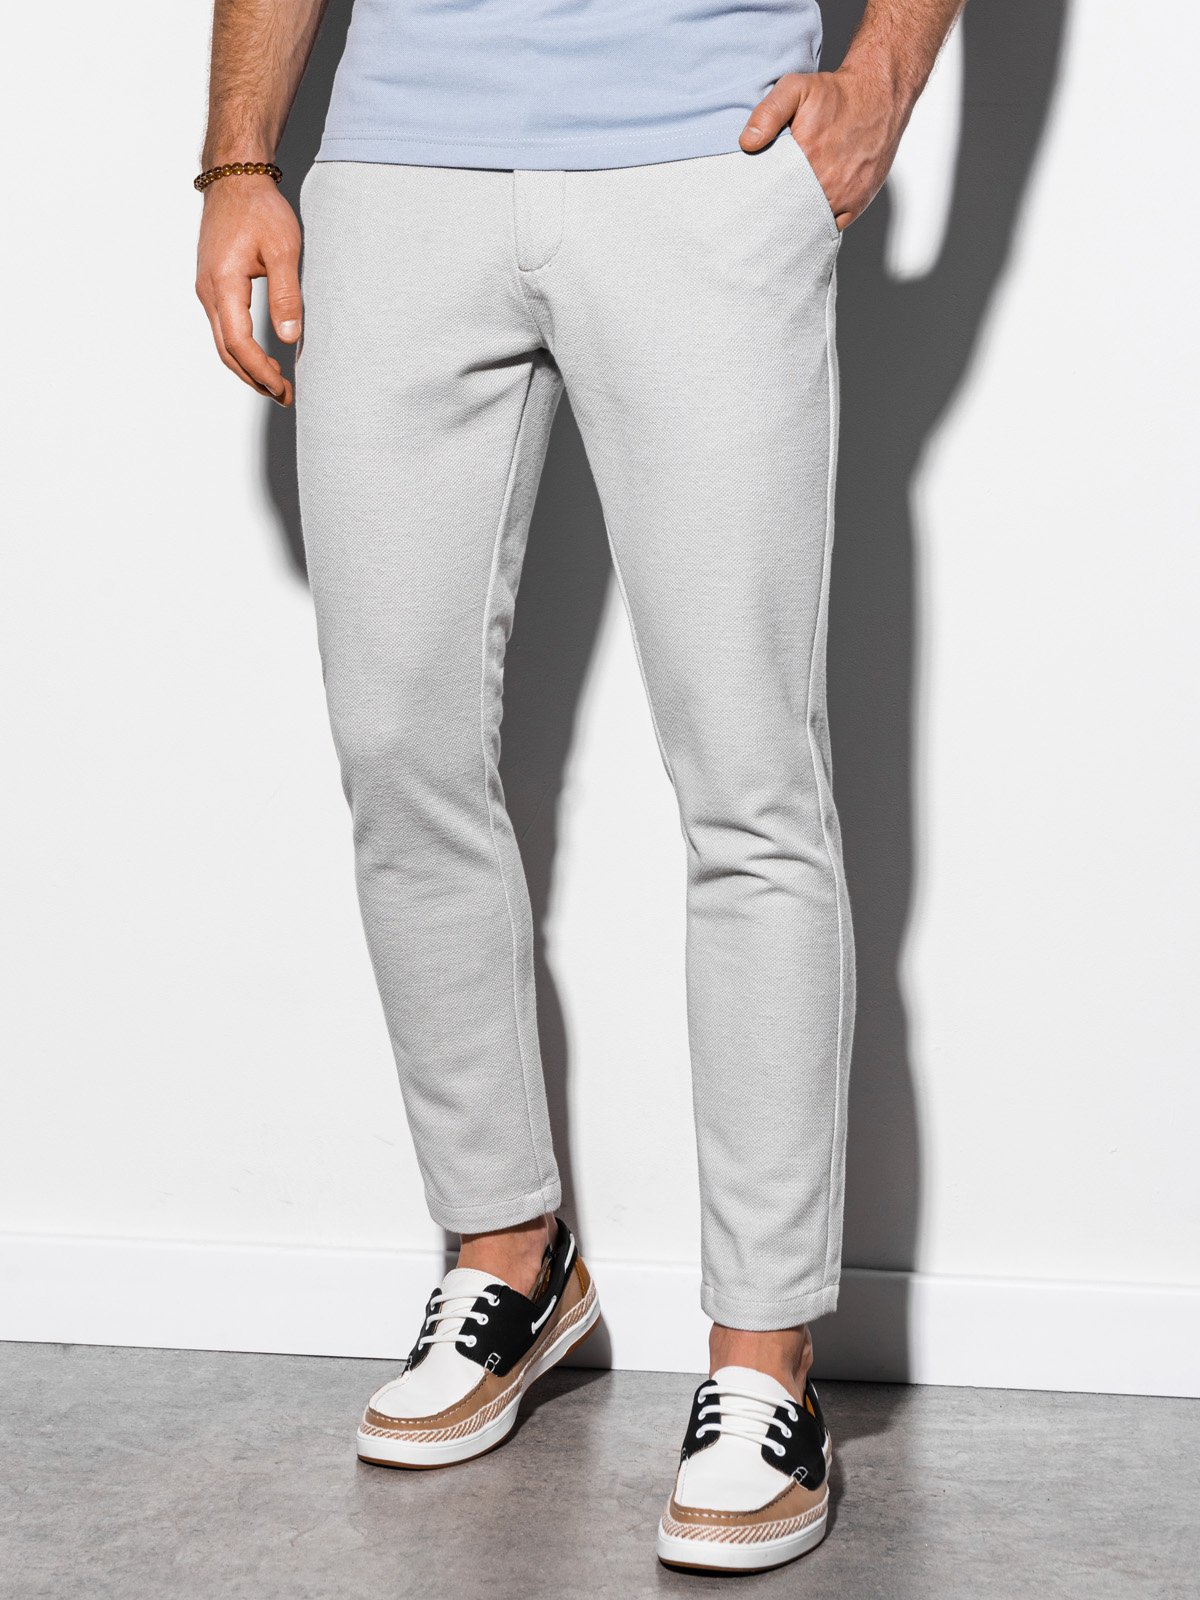 Men's pants chinos P891 - light grey | MODONE wholesale - Clothing For Men